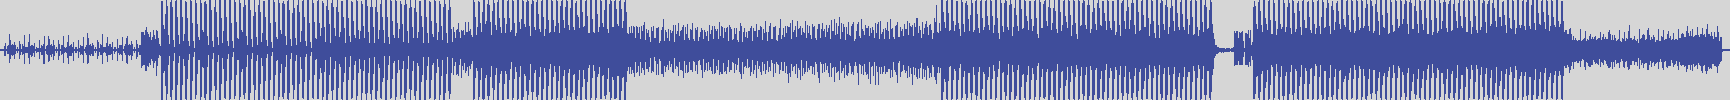 nf_boyz_records [NFY049] Sander's Motel - Swallow [Lotus 24 Mix] audio wave form